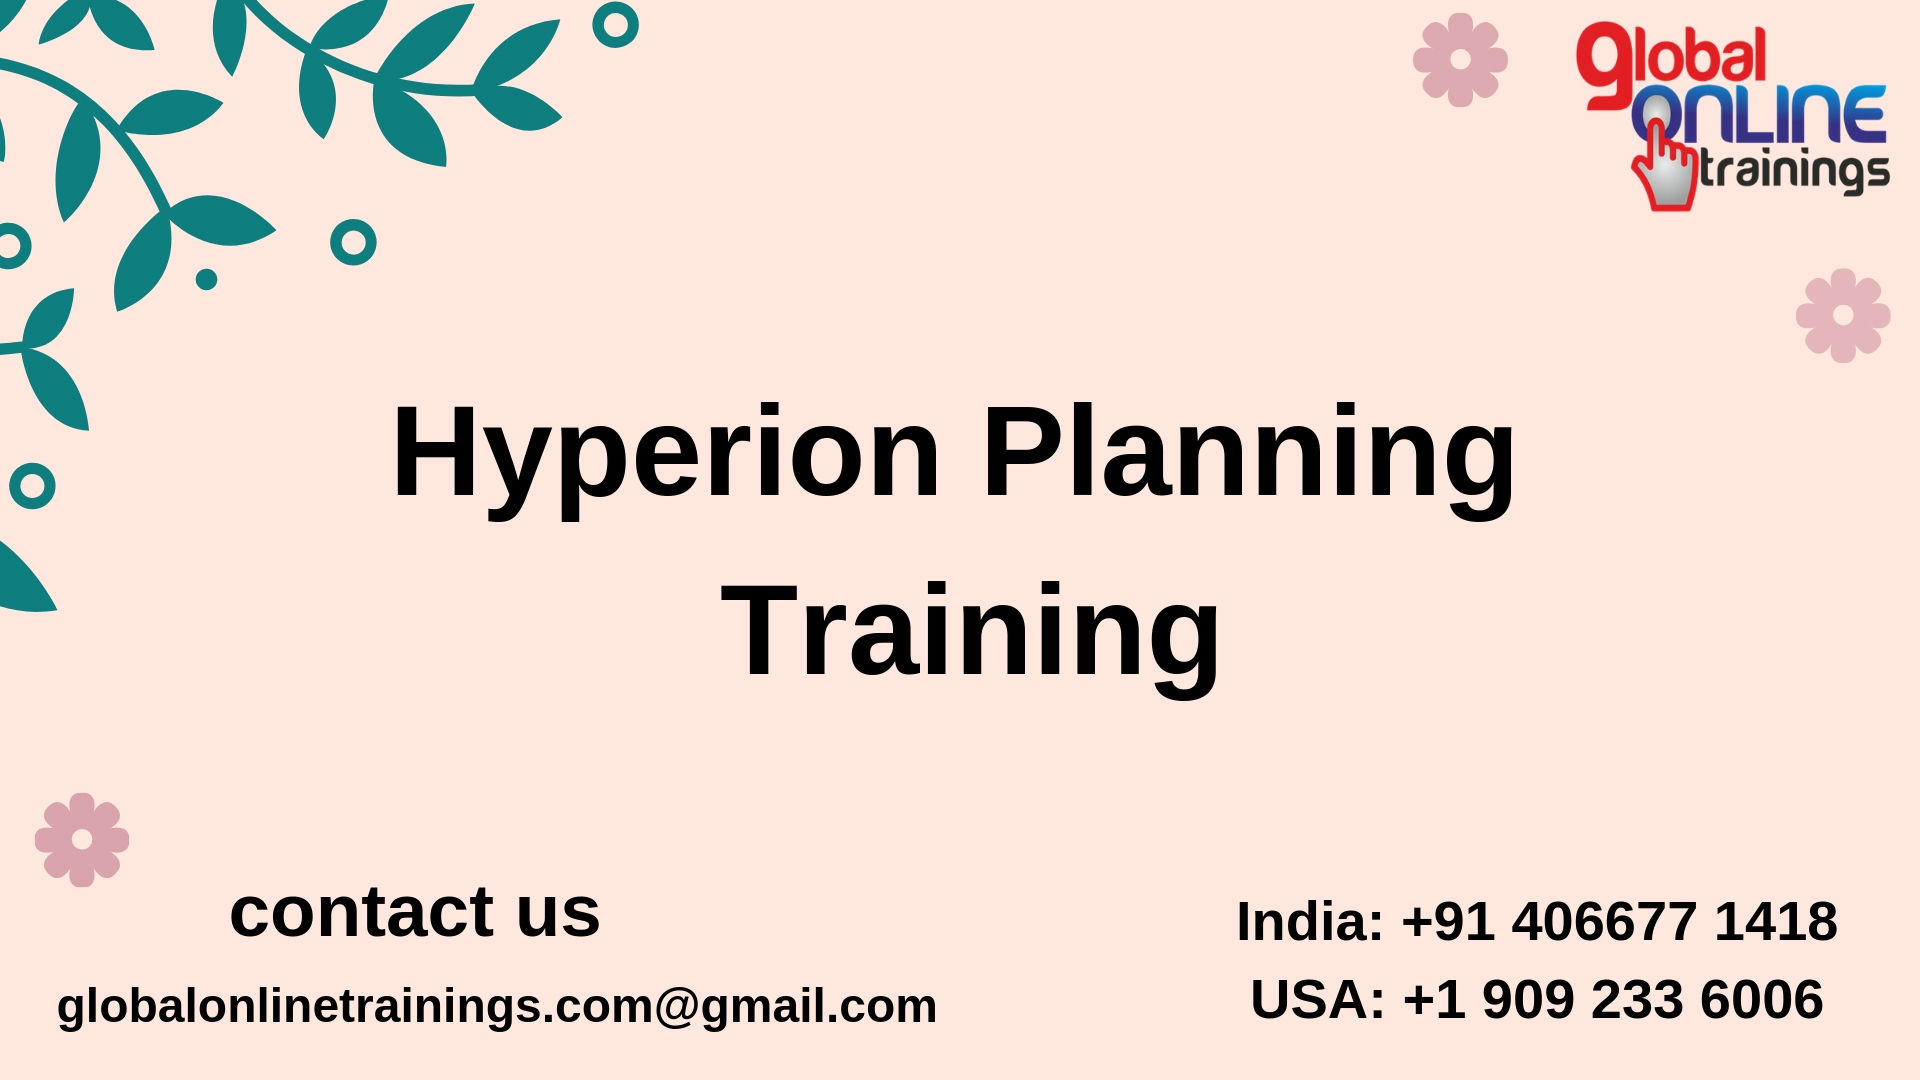 Hyperion Planning Training | Hyperion Planning Online Training - GOT, Hyderabad, Andhra Pradesh, India